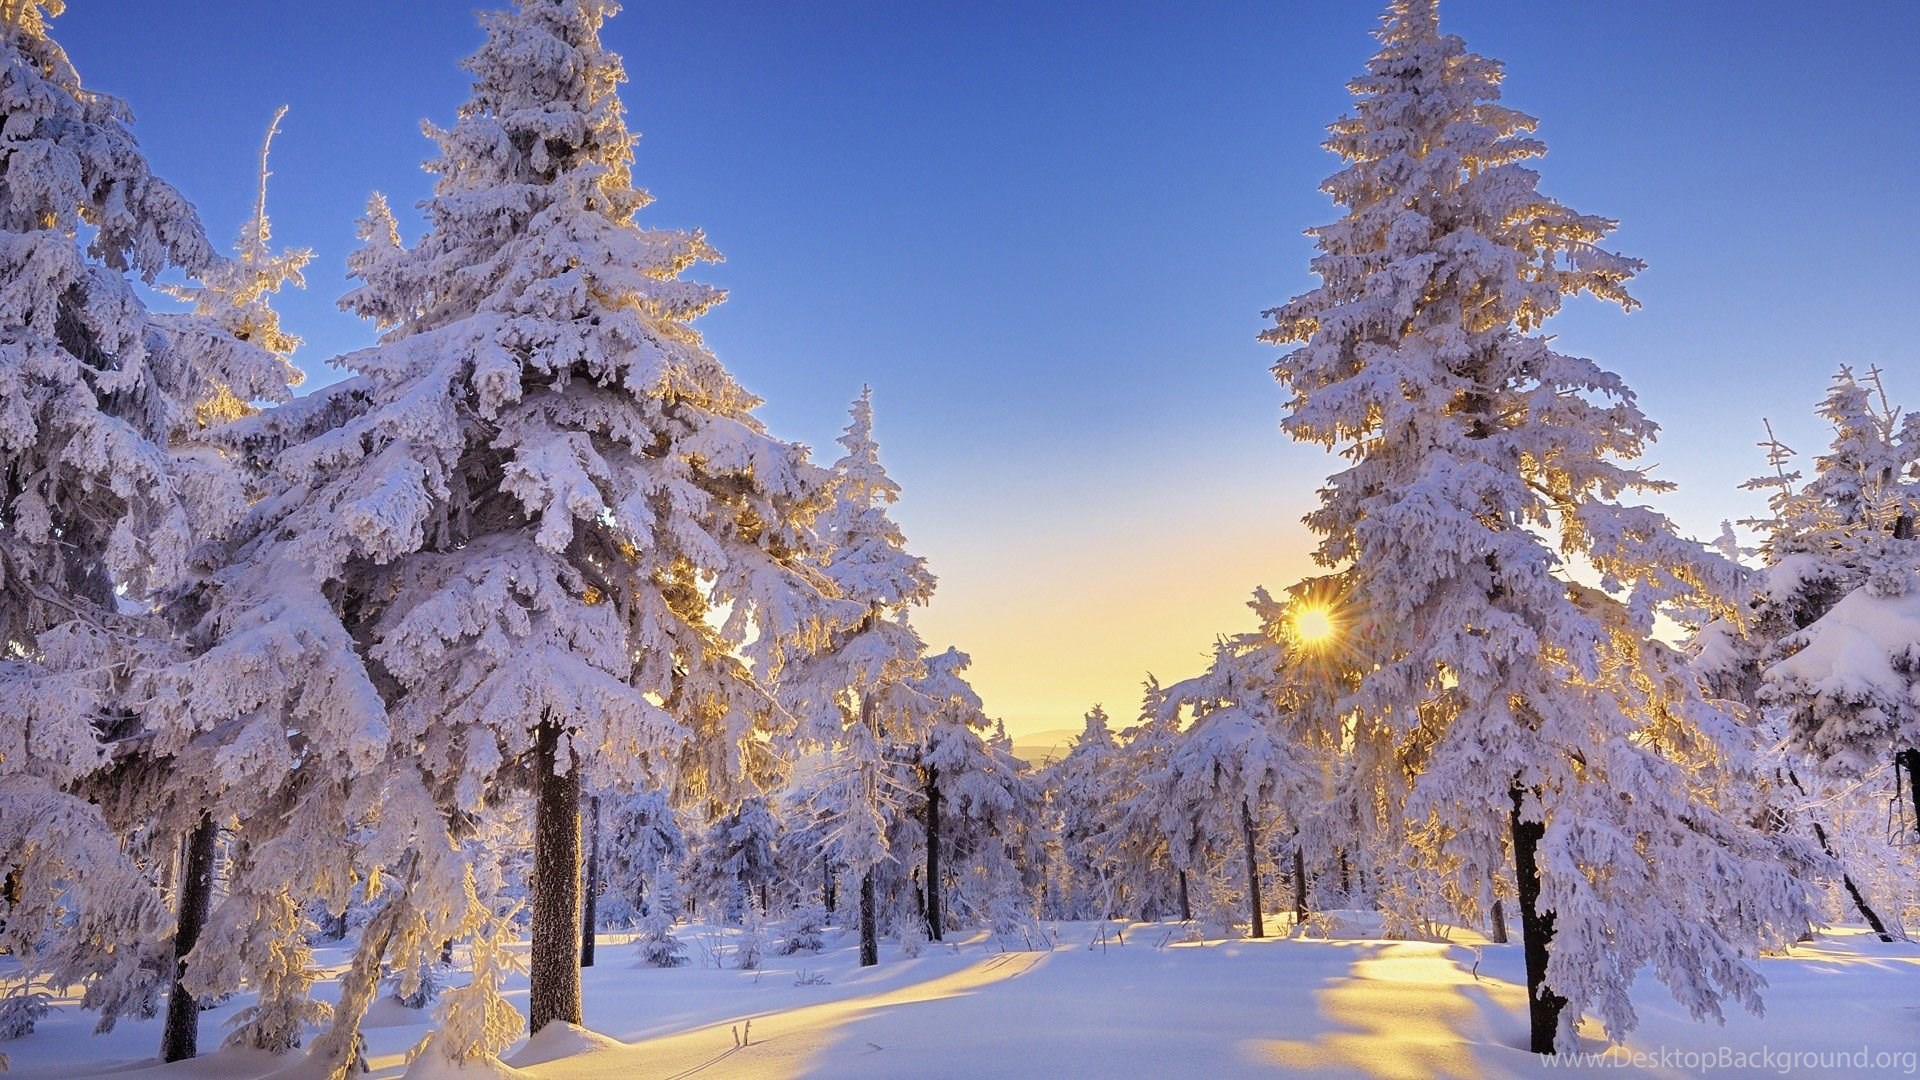 HD Pine Forest Winter Wonderland Wallpaper 1920×1080 Full Size. Desktop Background